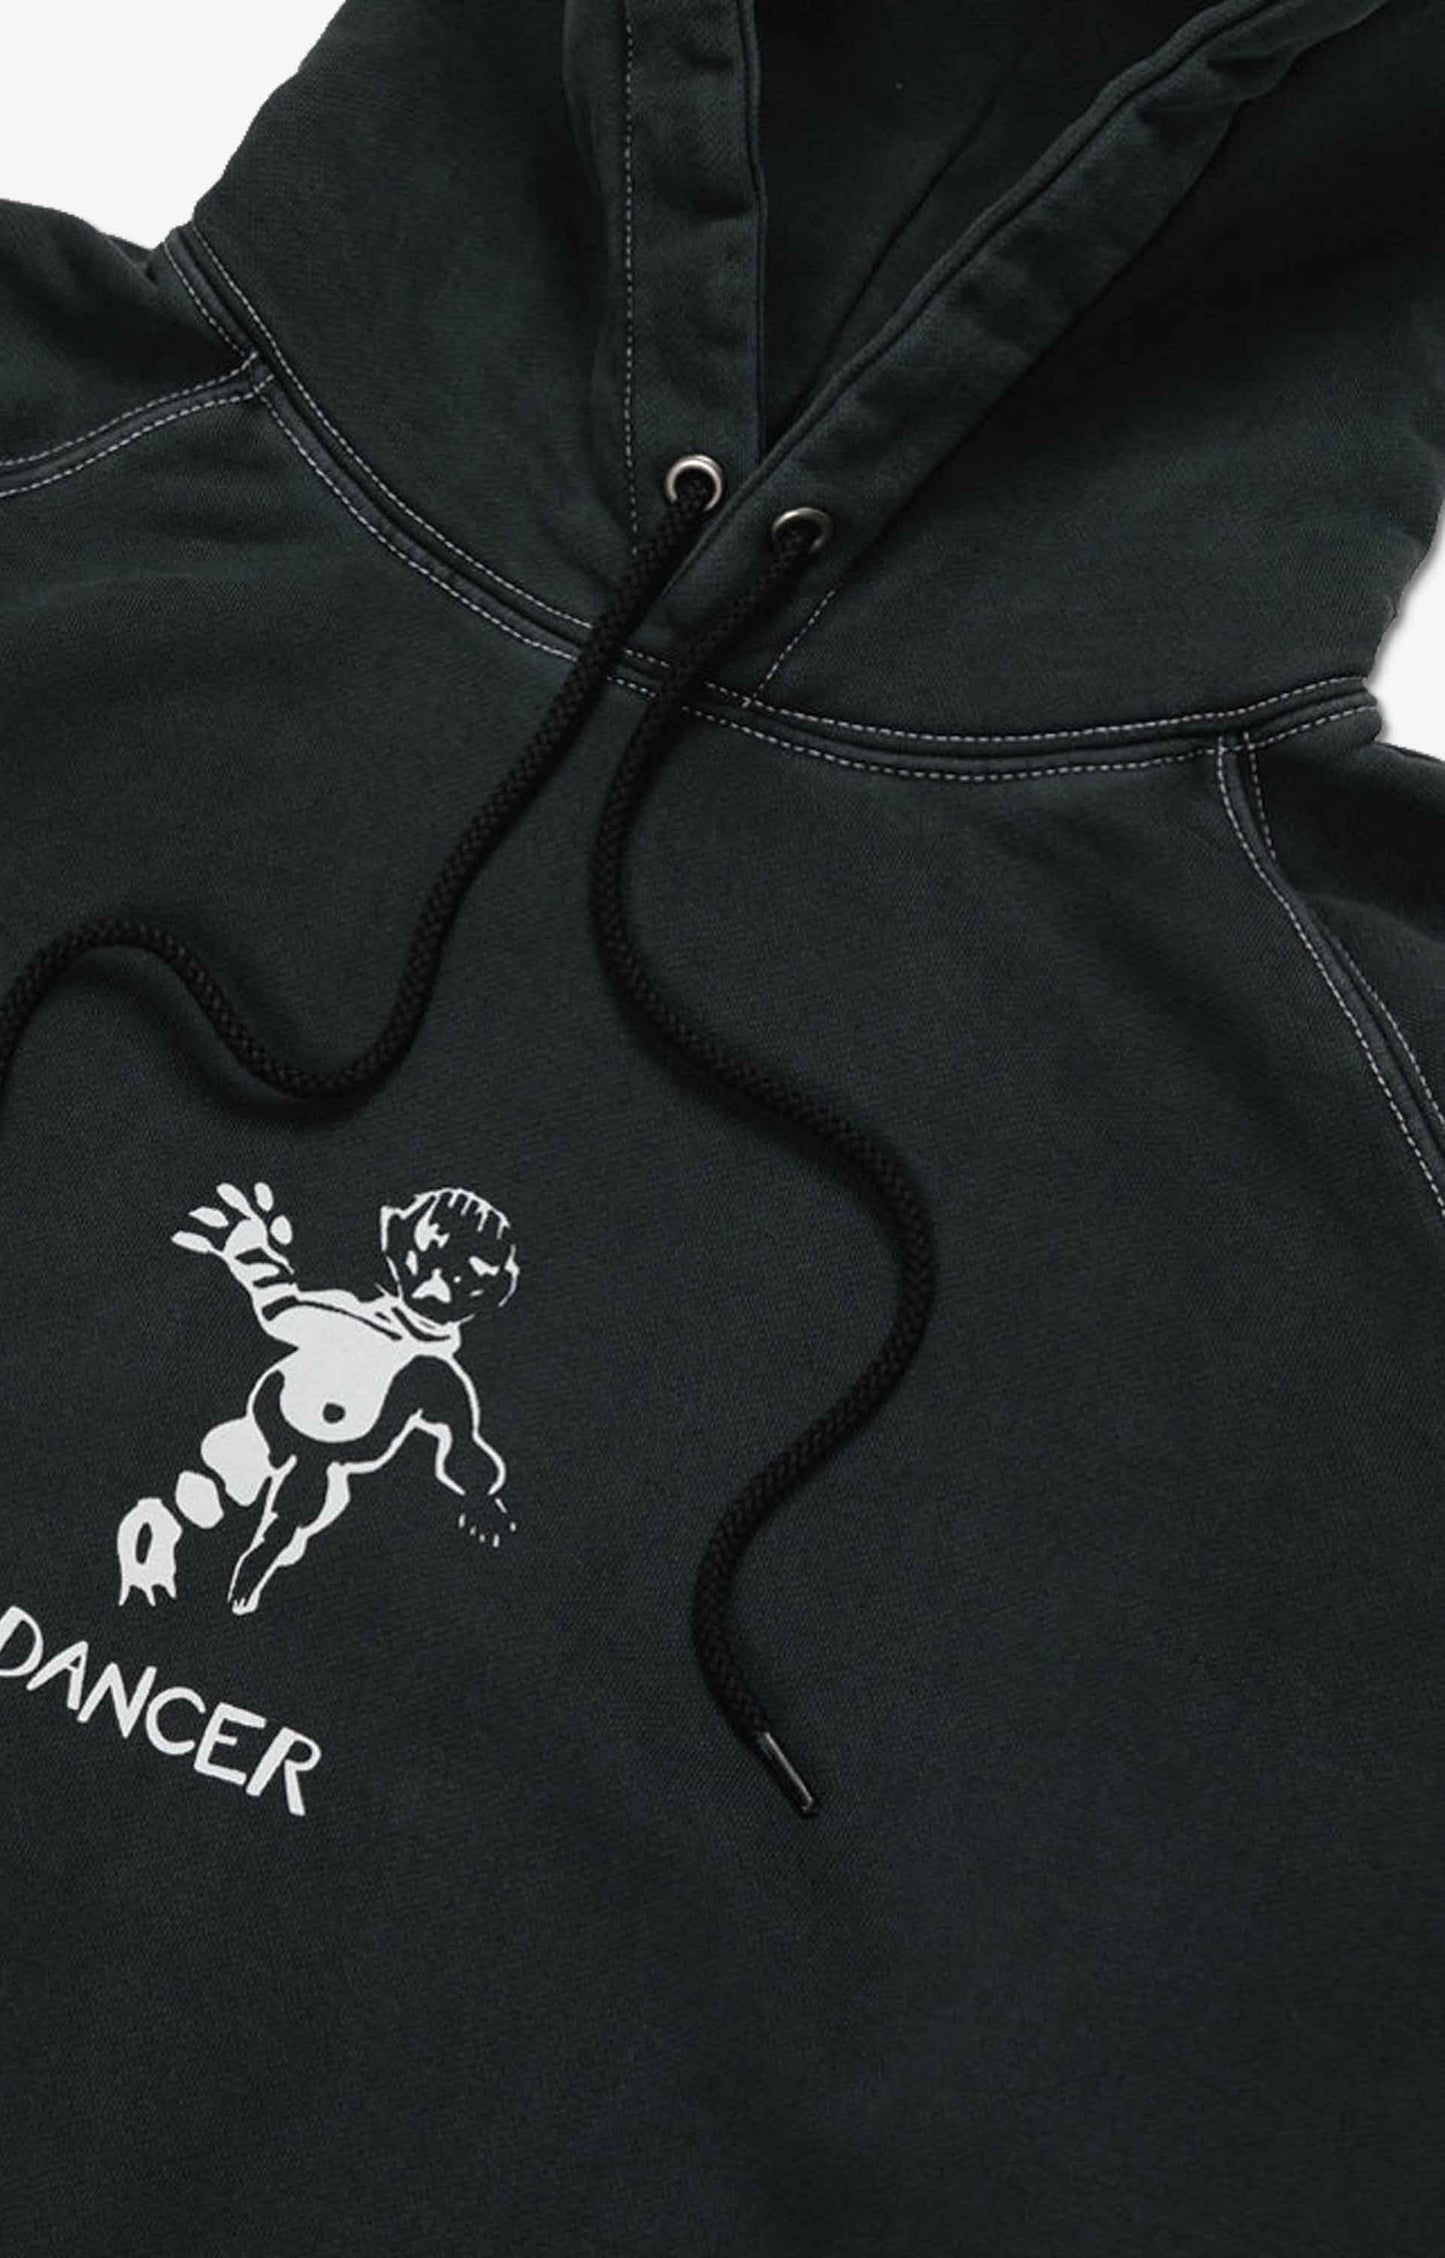 Dancer OG Logo Hoodie, Black/White Stitch